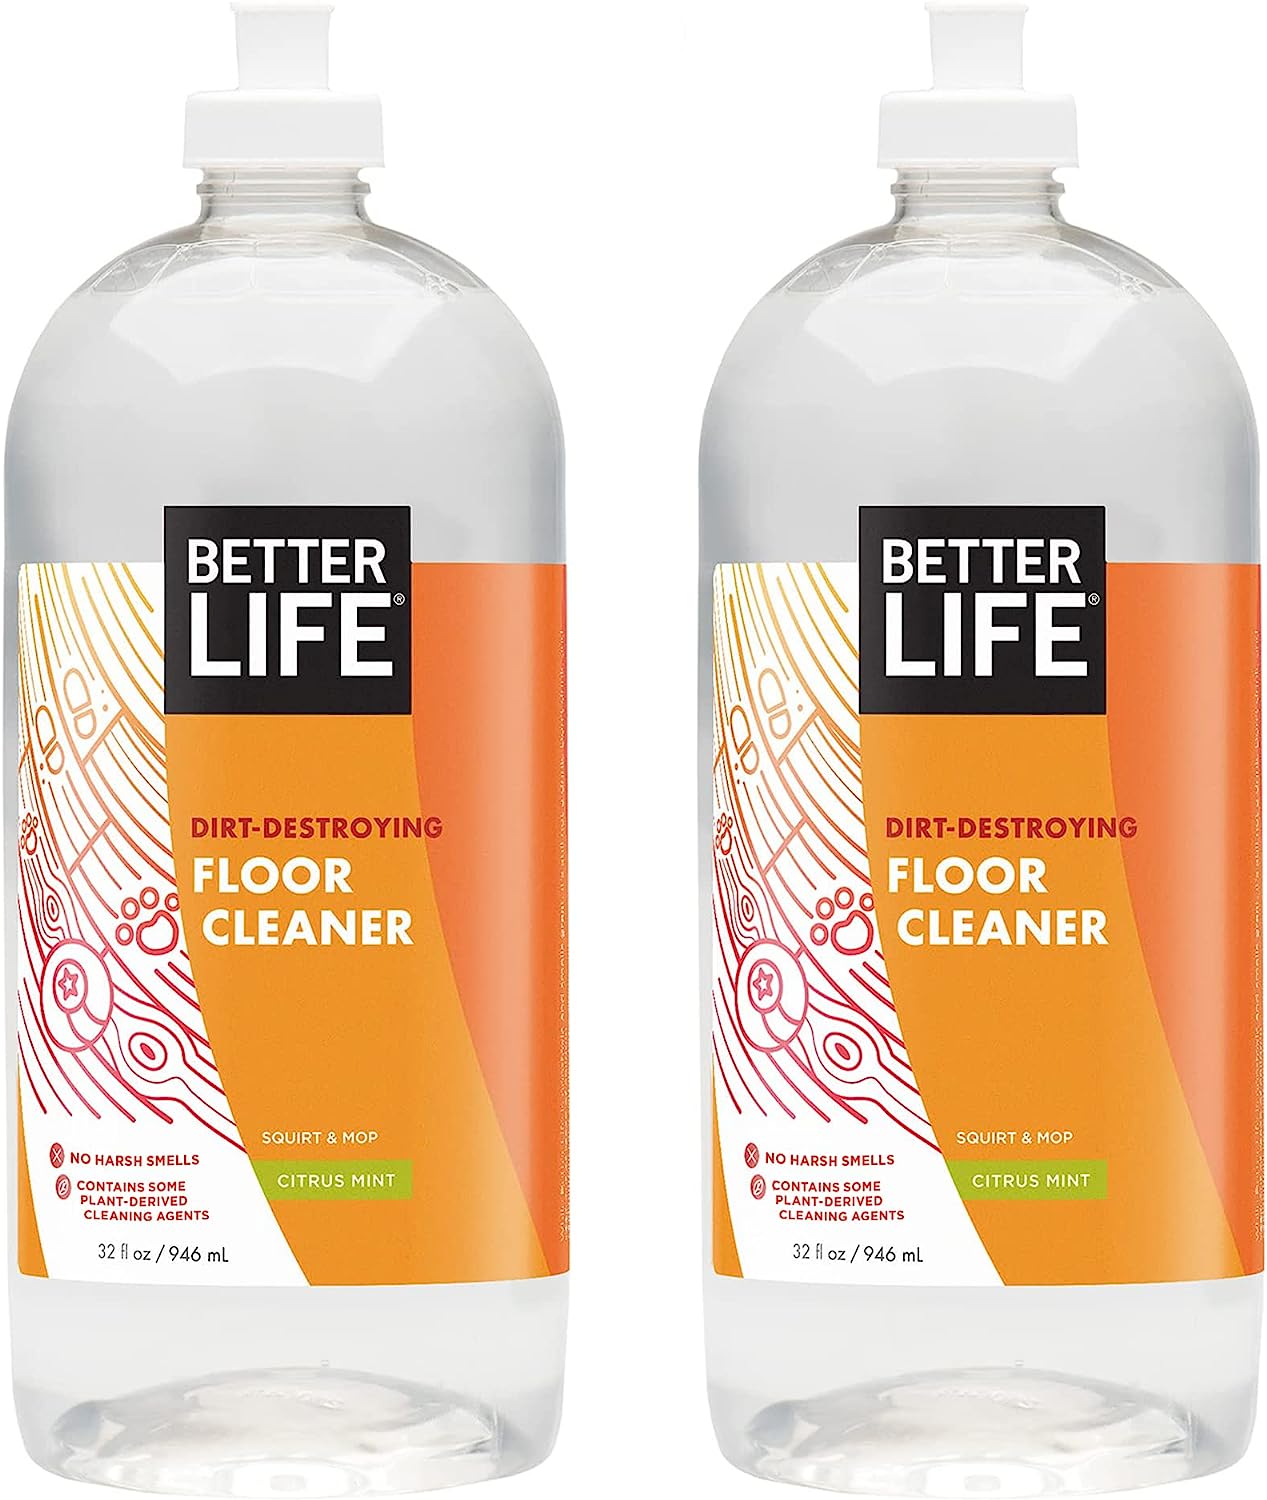 Better Life Naturally Dirt-Destroying Floor Cleaner, [...]